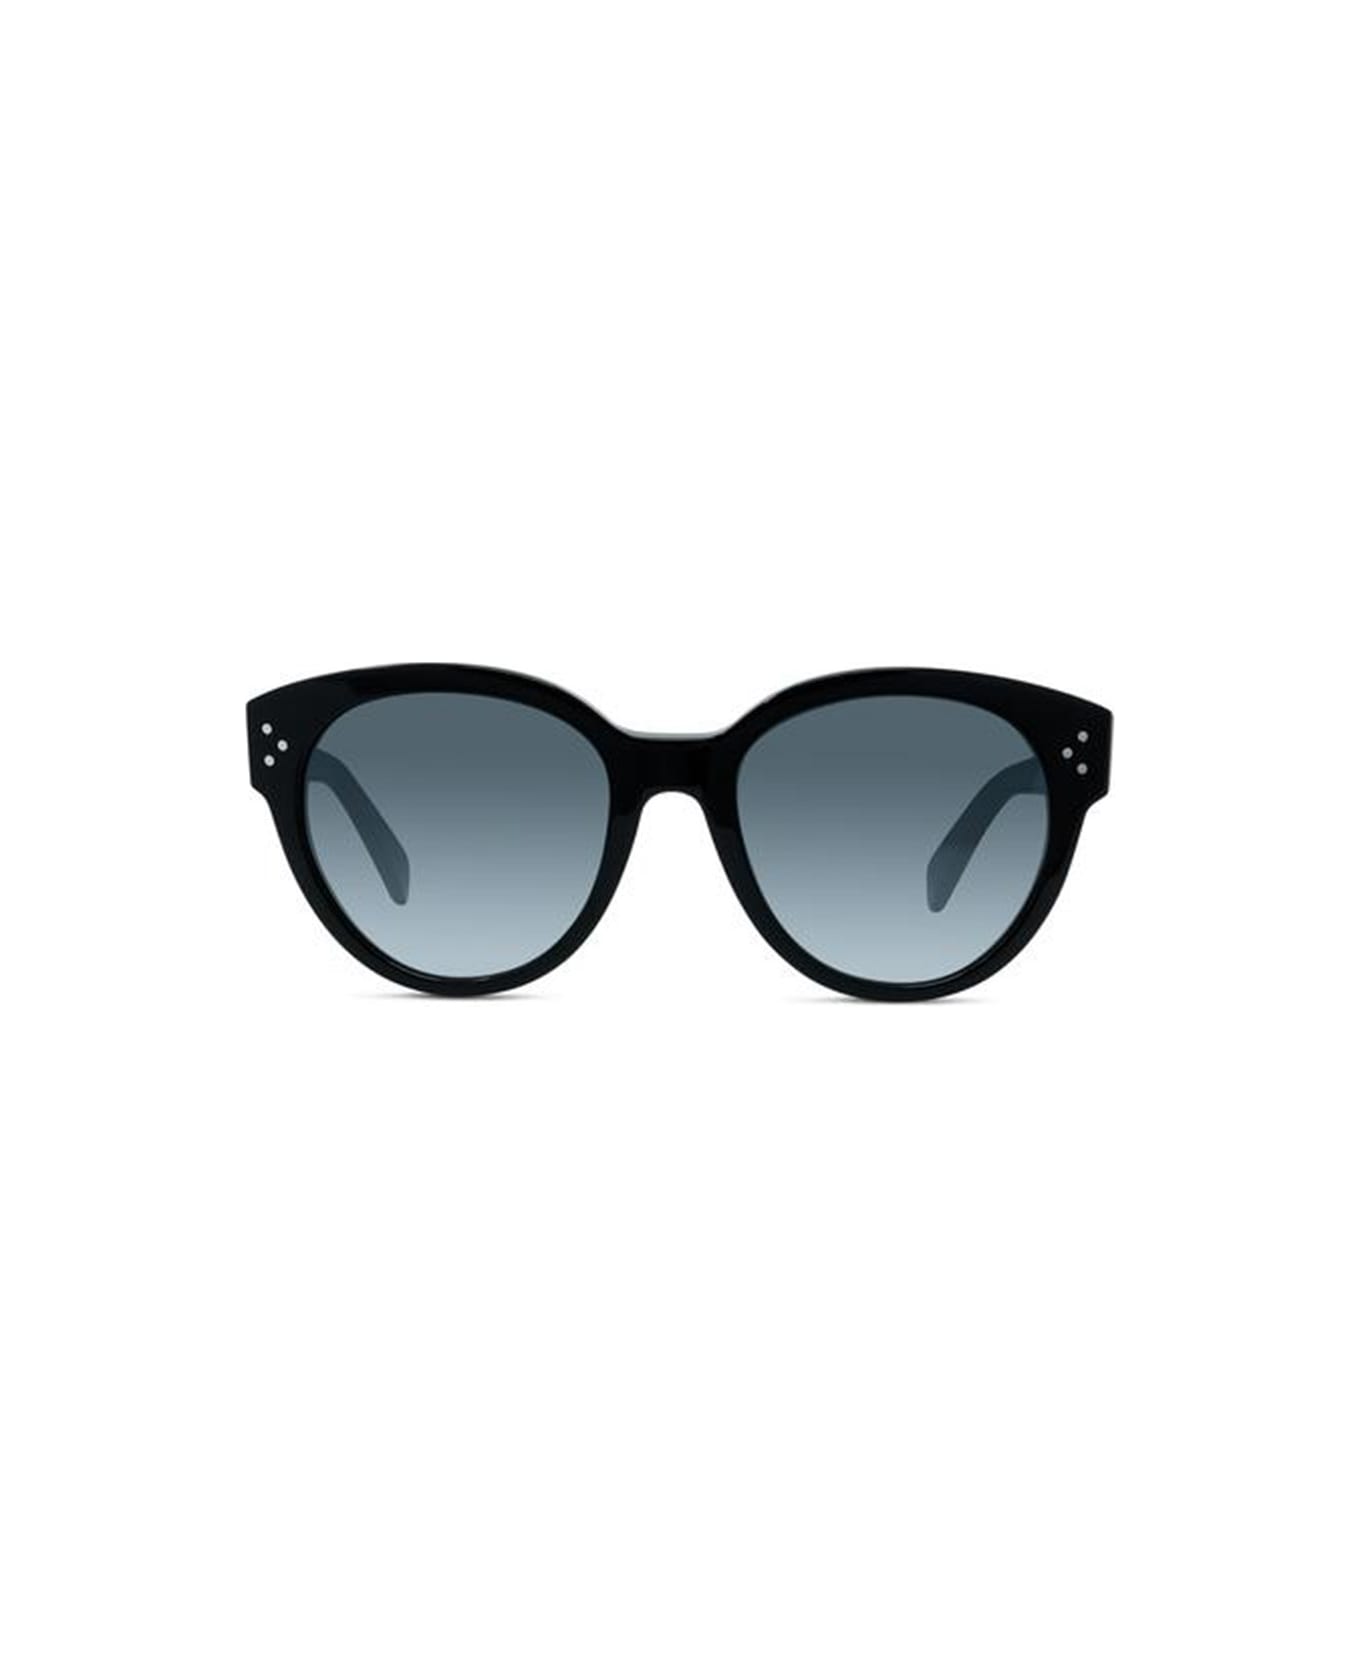 Celine Sunglasses - Nero/Blu sfumato サングラス